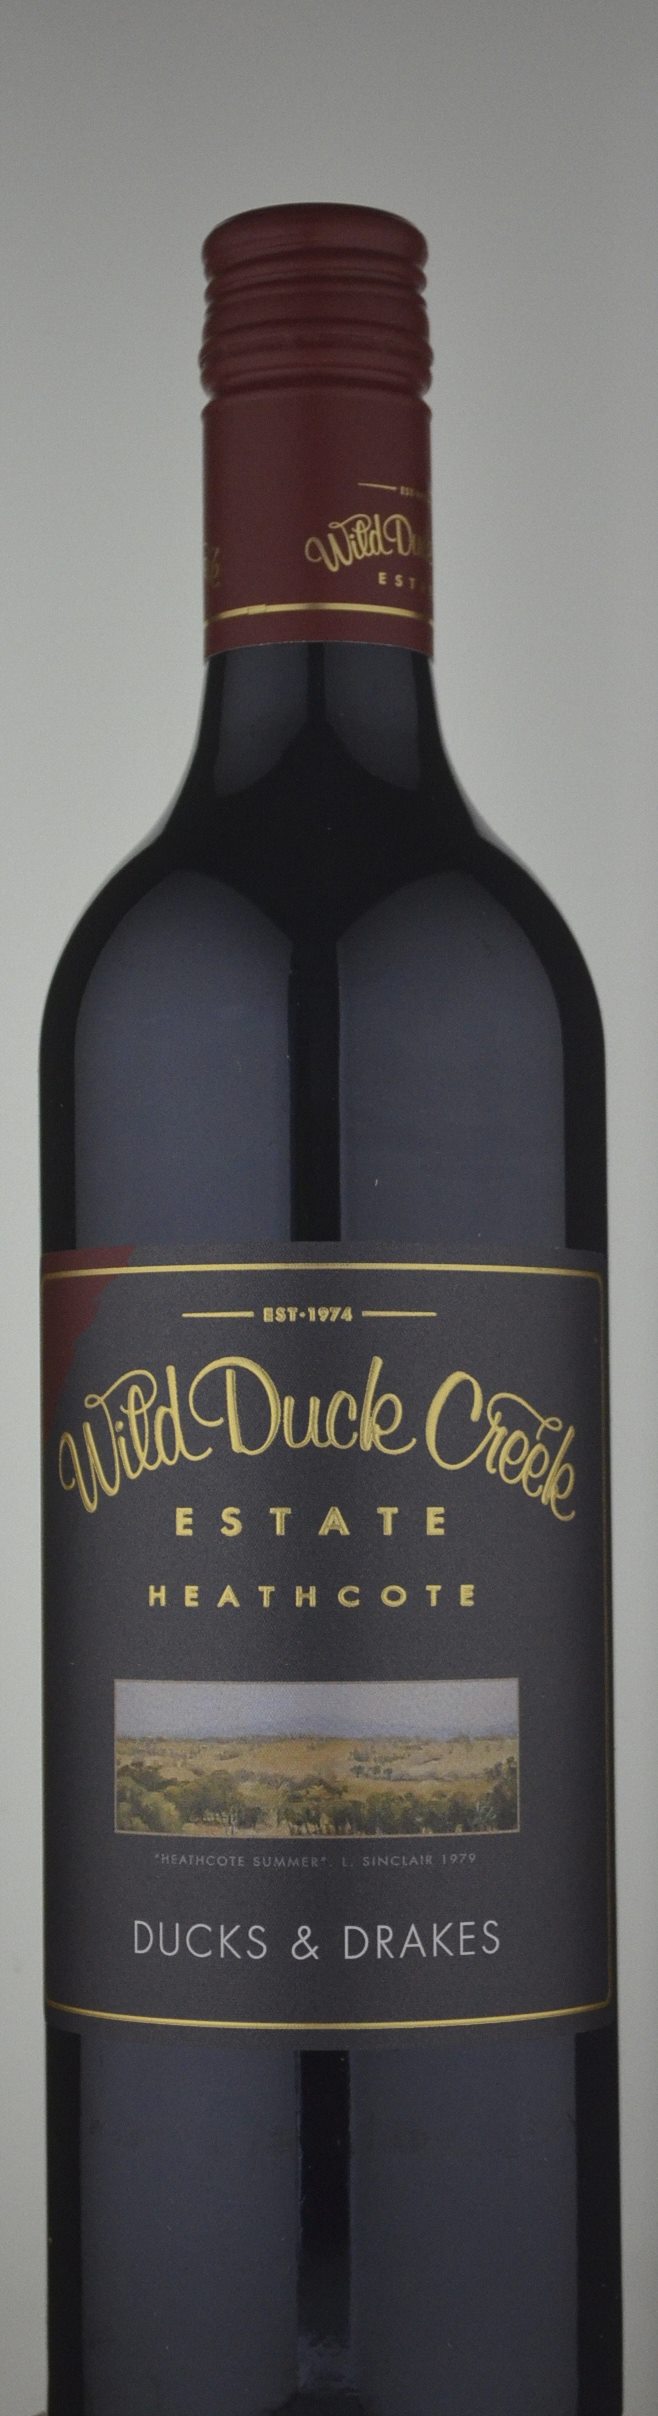 Wild Duck Creek Ducks & Drakes Cabernet Sauvignon 2018